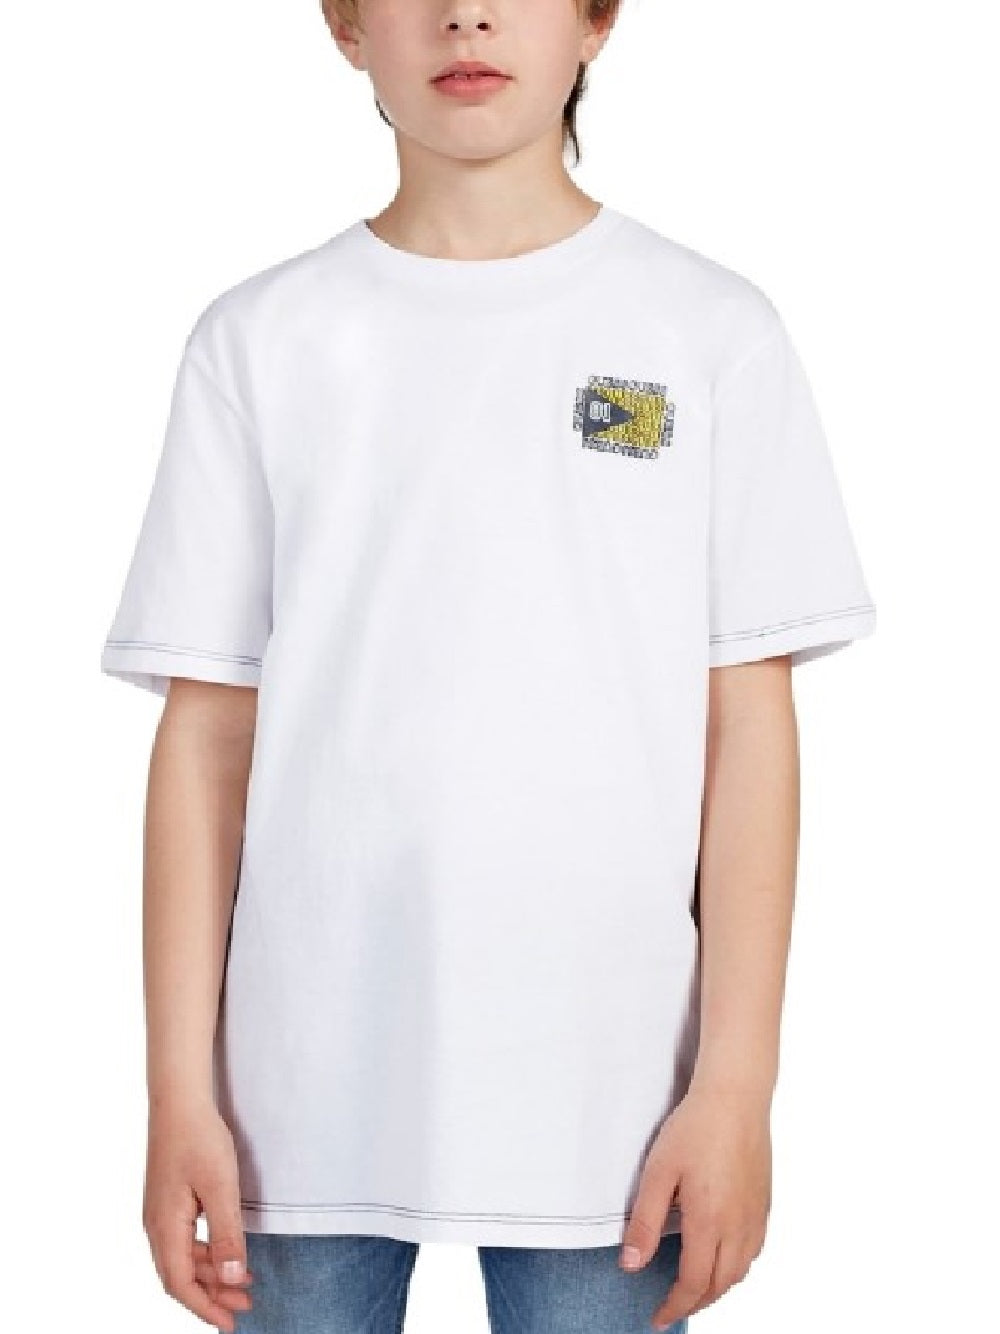 T-shirt Guess da bambino modello L2RI30